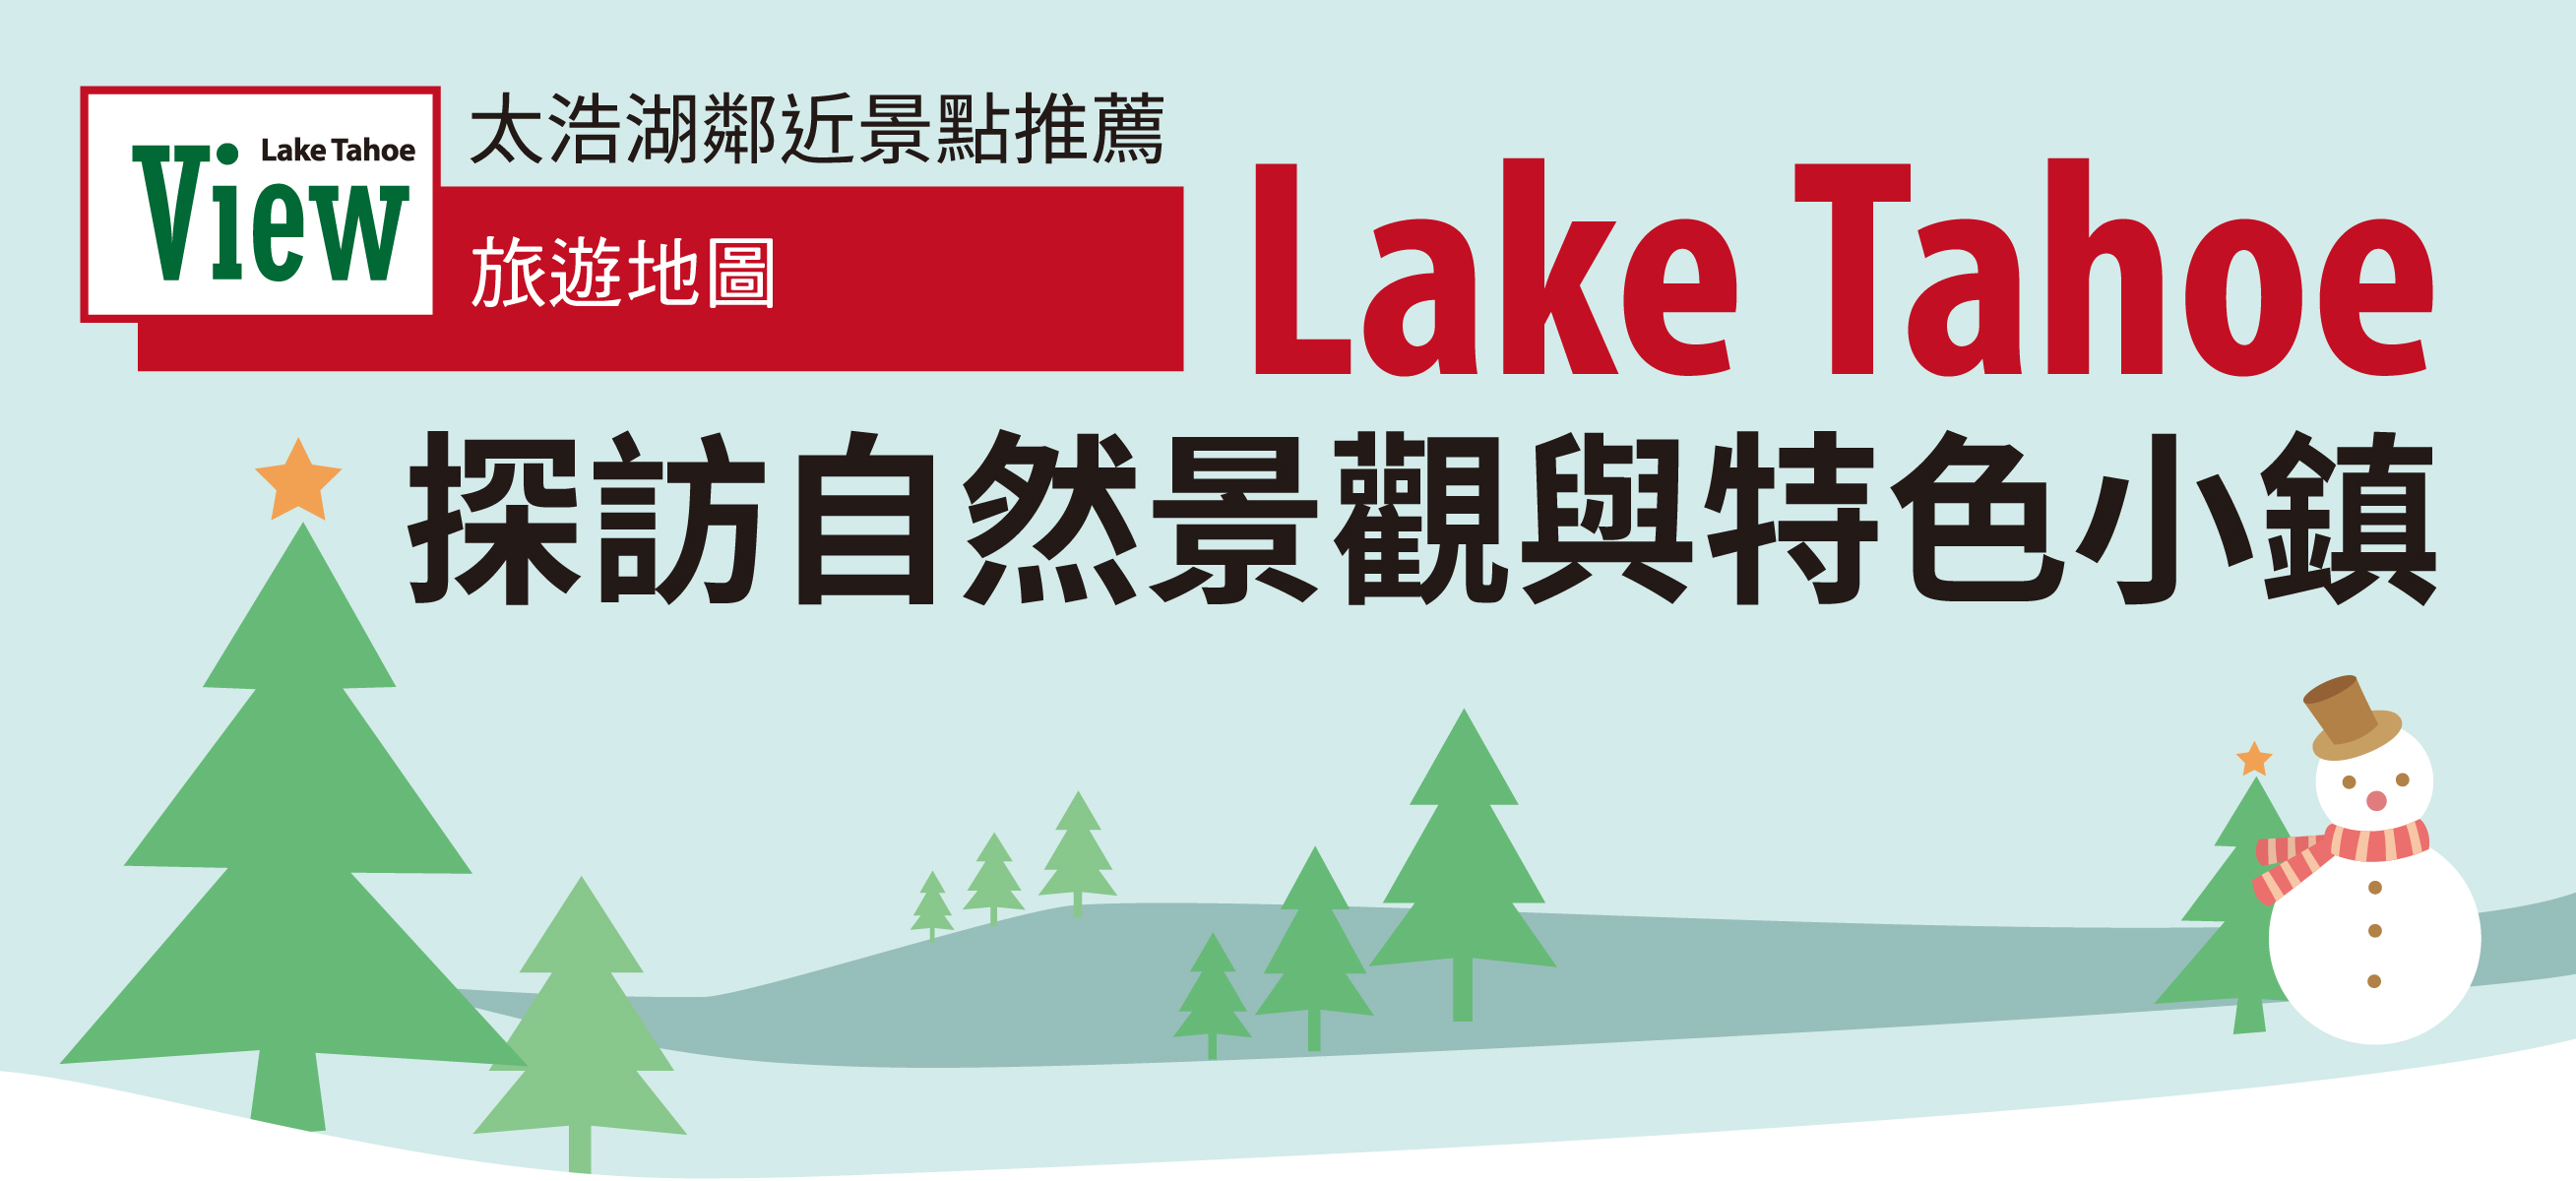 Lake Tahoe guide banner-01